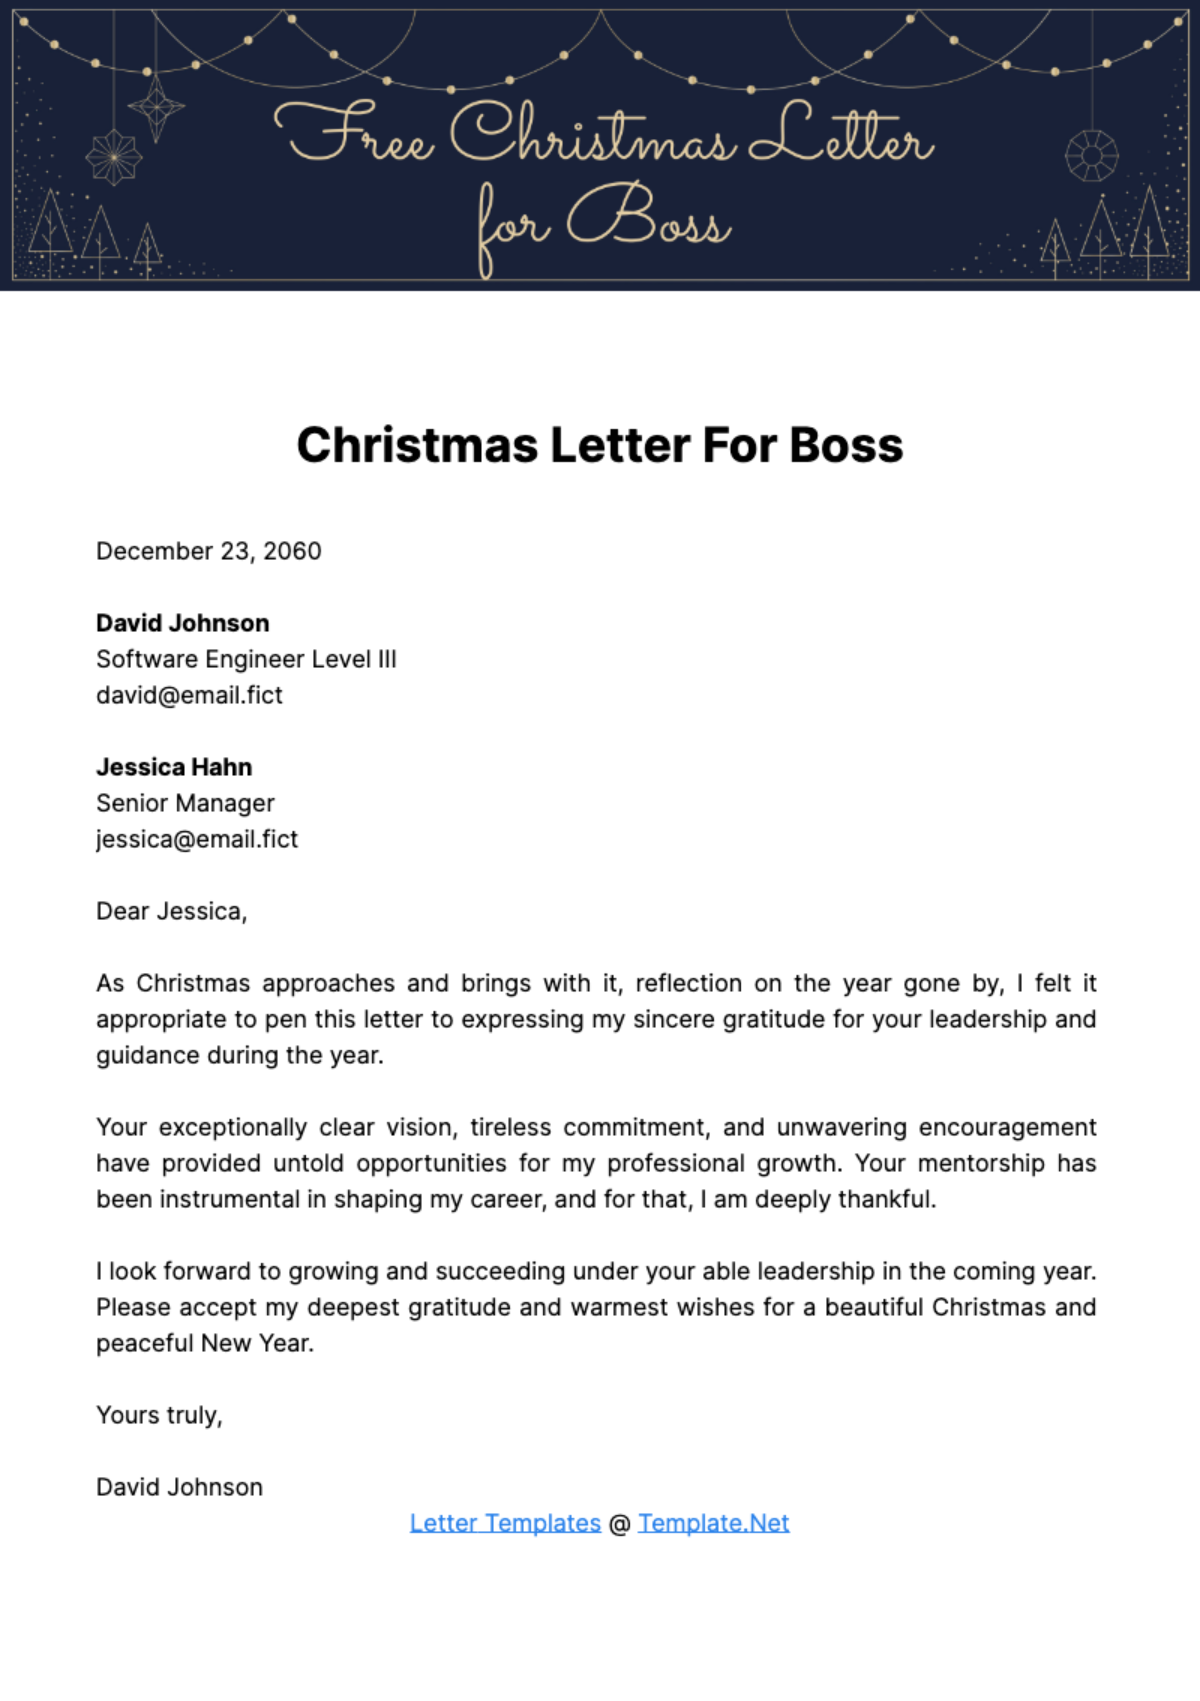 Free Christmas Letter for Boss Template